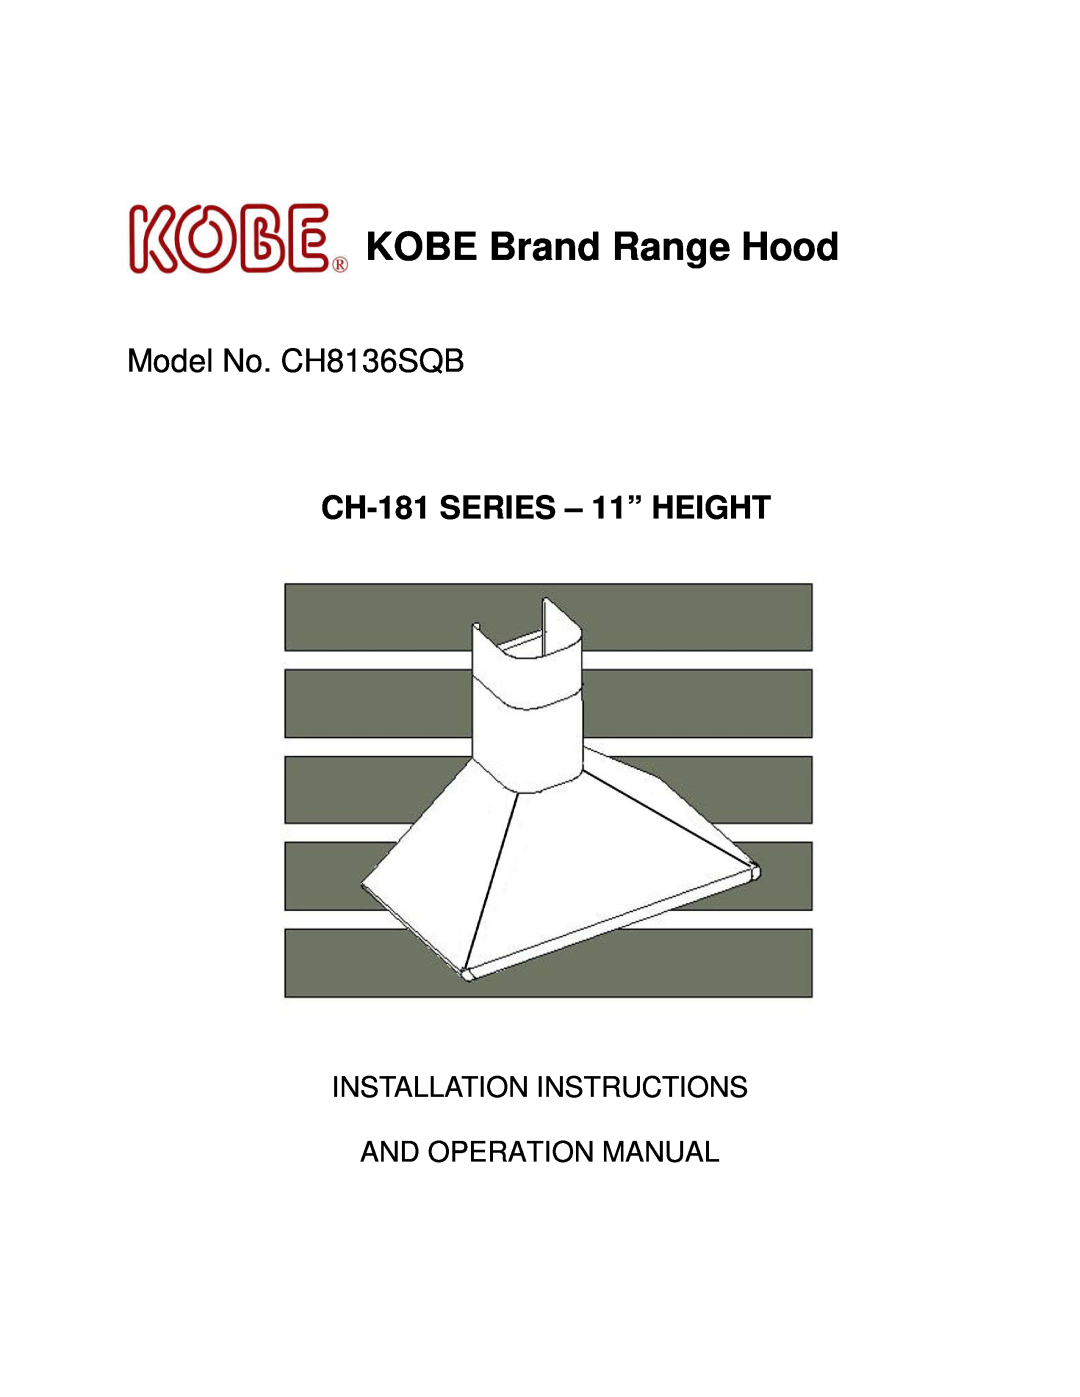 Kobe Range Hoods installation instructions Model No. CH8136SQB, KOBE Brand Range Hood, CH-181 SERIES - 11” HEIGHT 